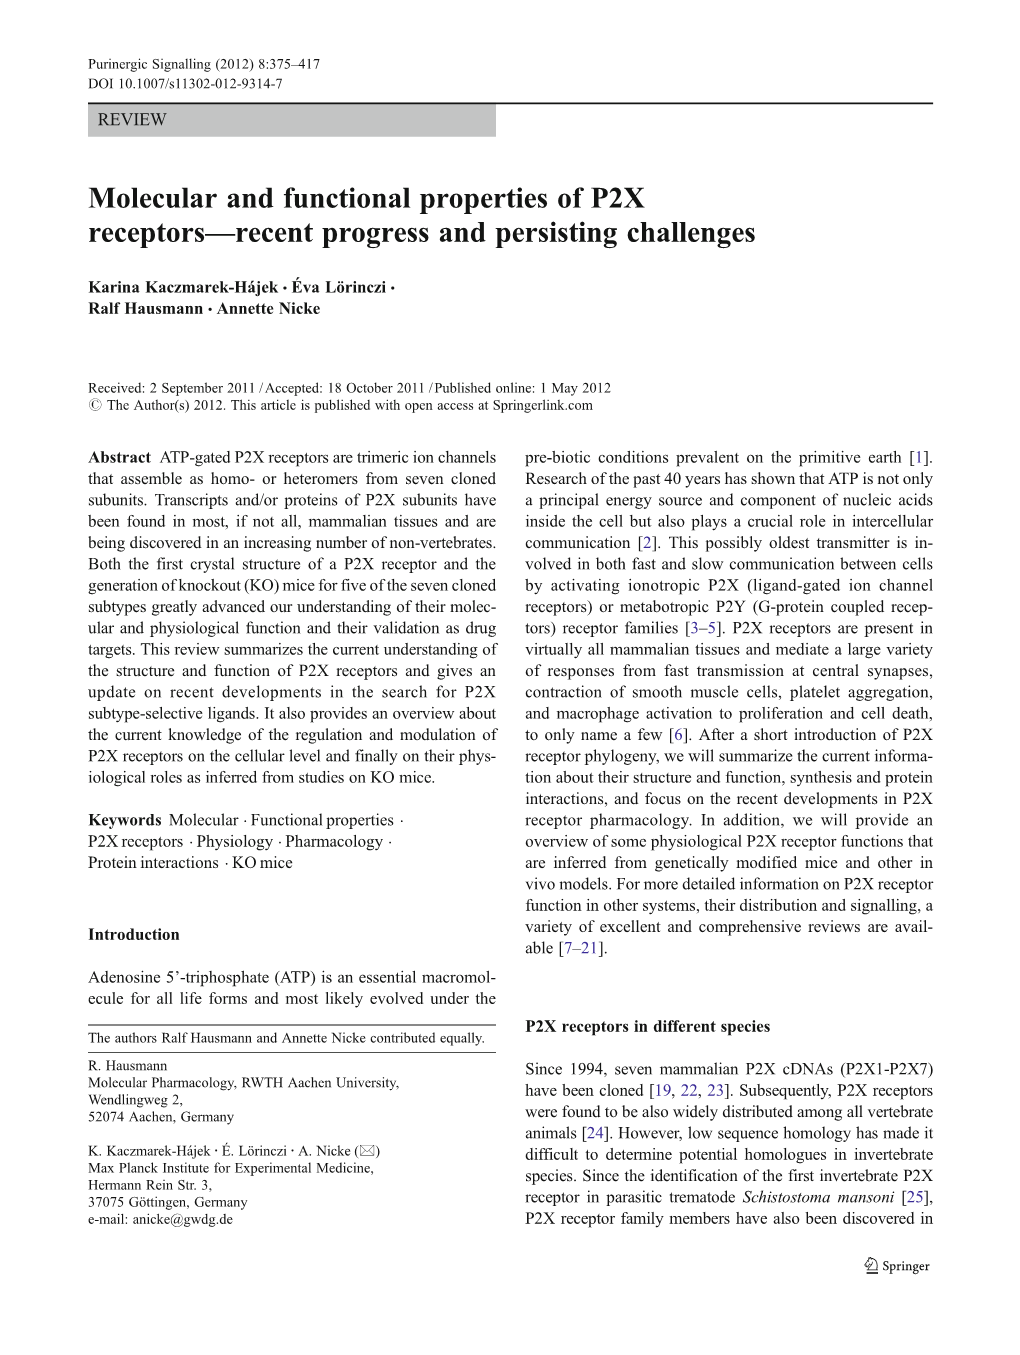 Molecular and Functional Properties of P2X Receptors—Recent Progress and Persisting Challenges